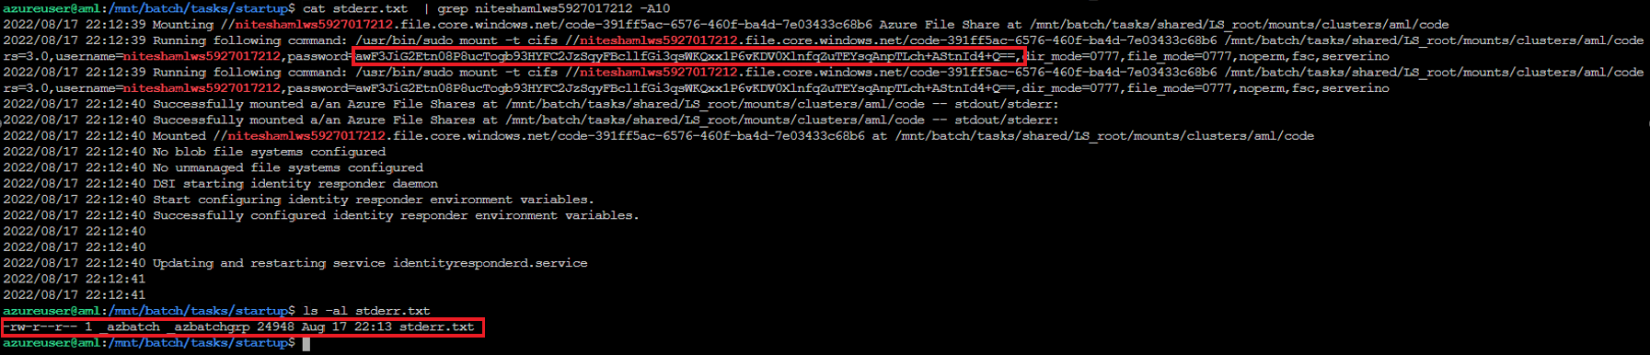 Figure 9. Storage account credential in Azure Batch error logs